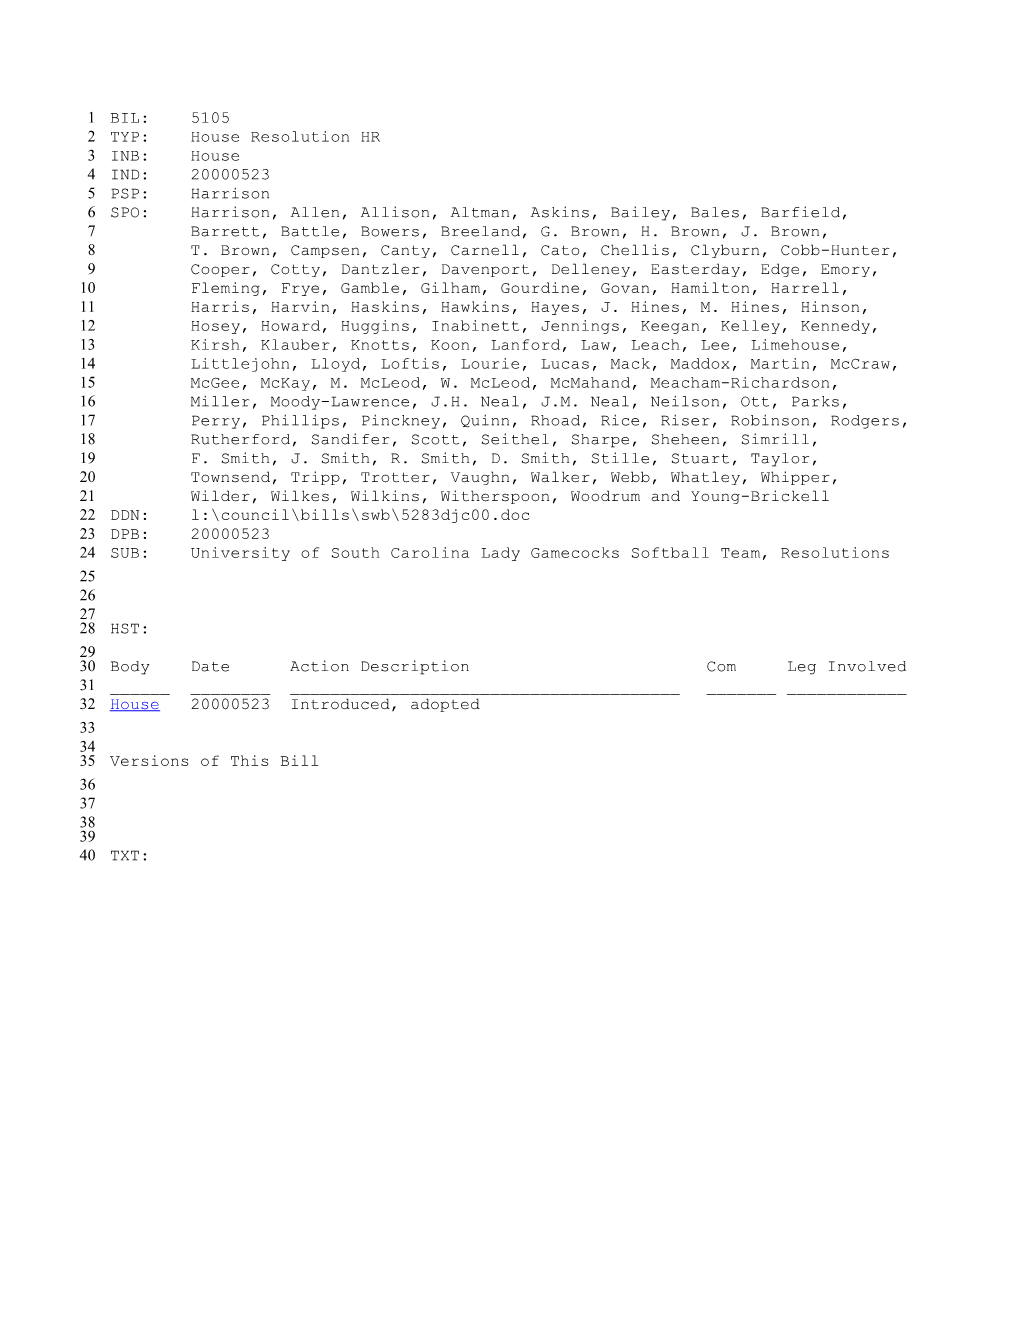 1999-2000 Bill 5105: University of South Carolina Lady Gamecocks Softball Team, Resolutions